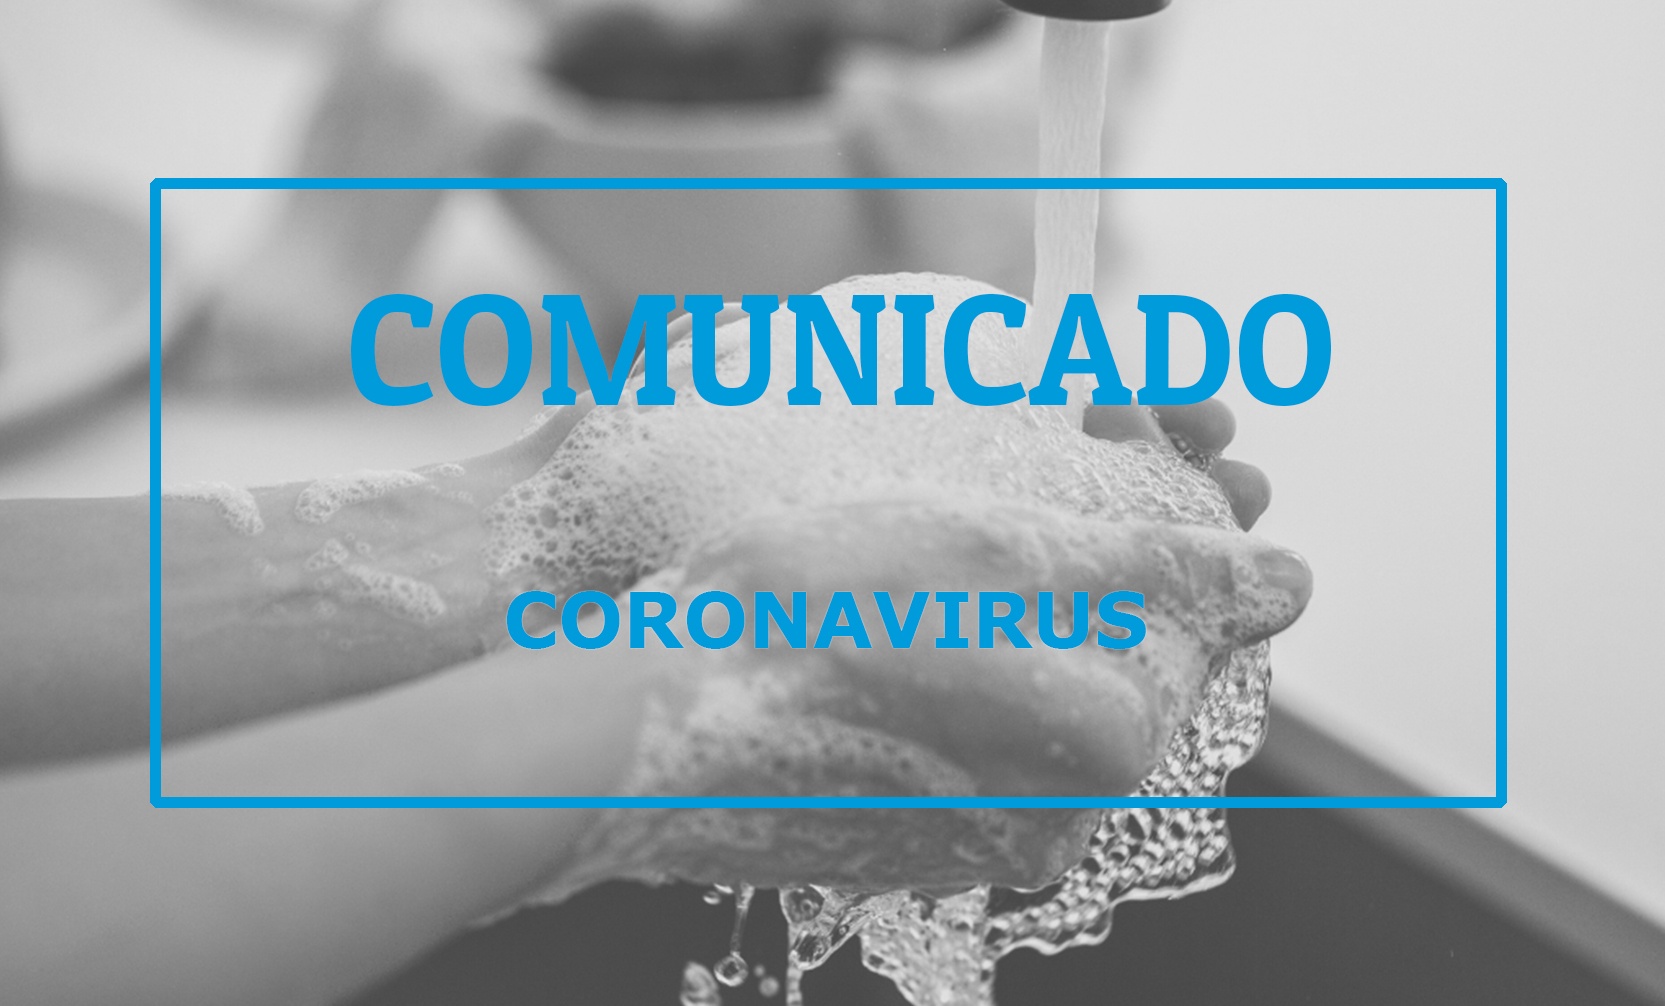 Comunicado Coronavirus